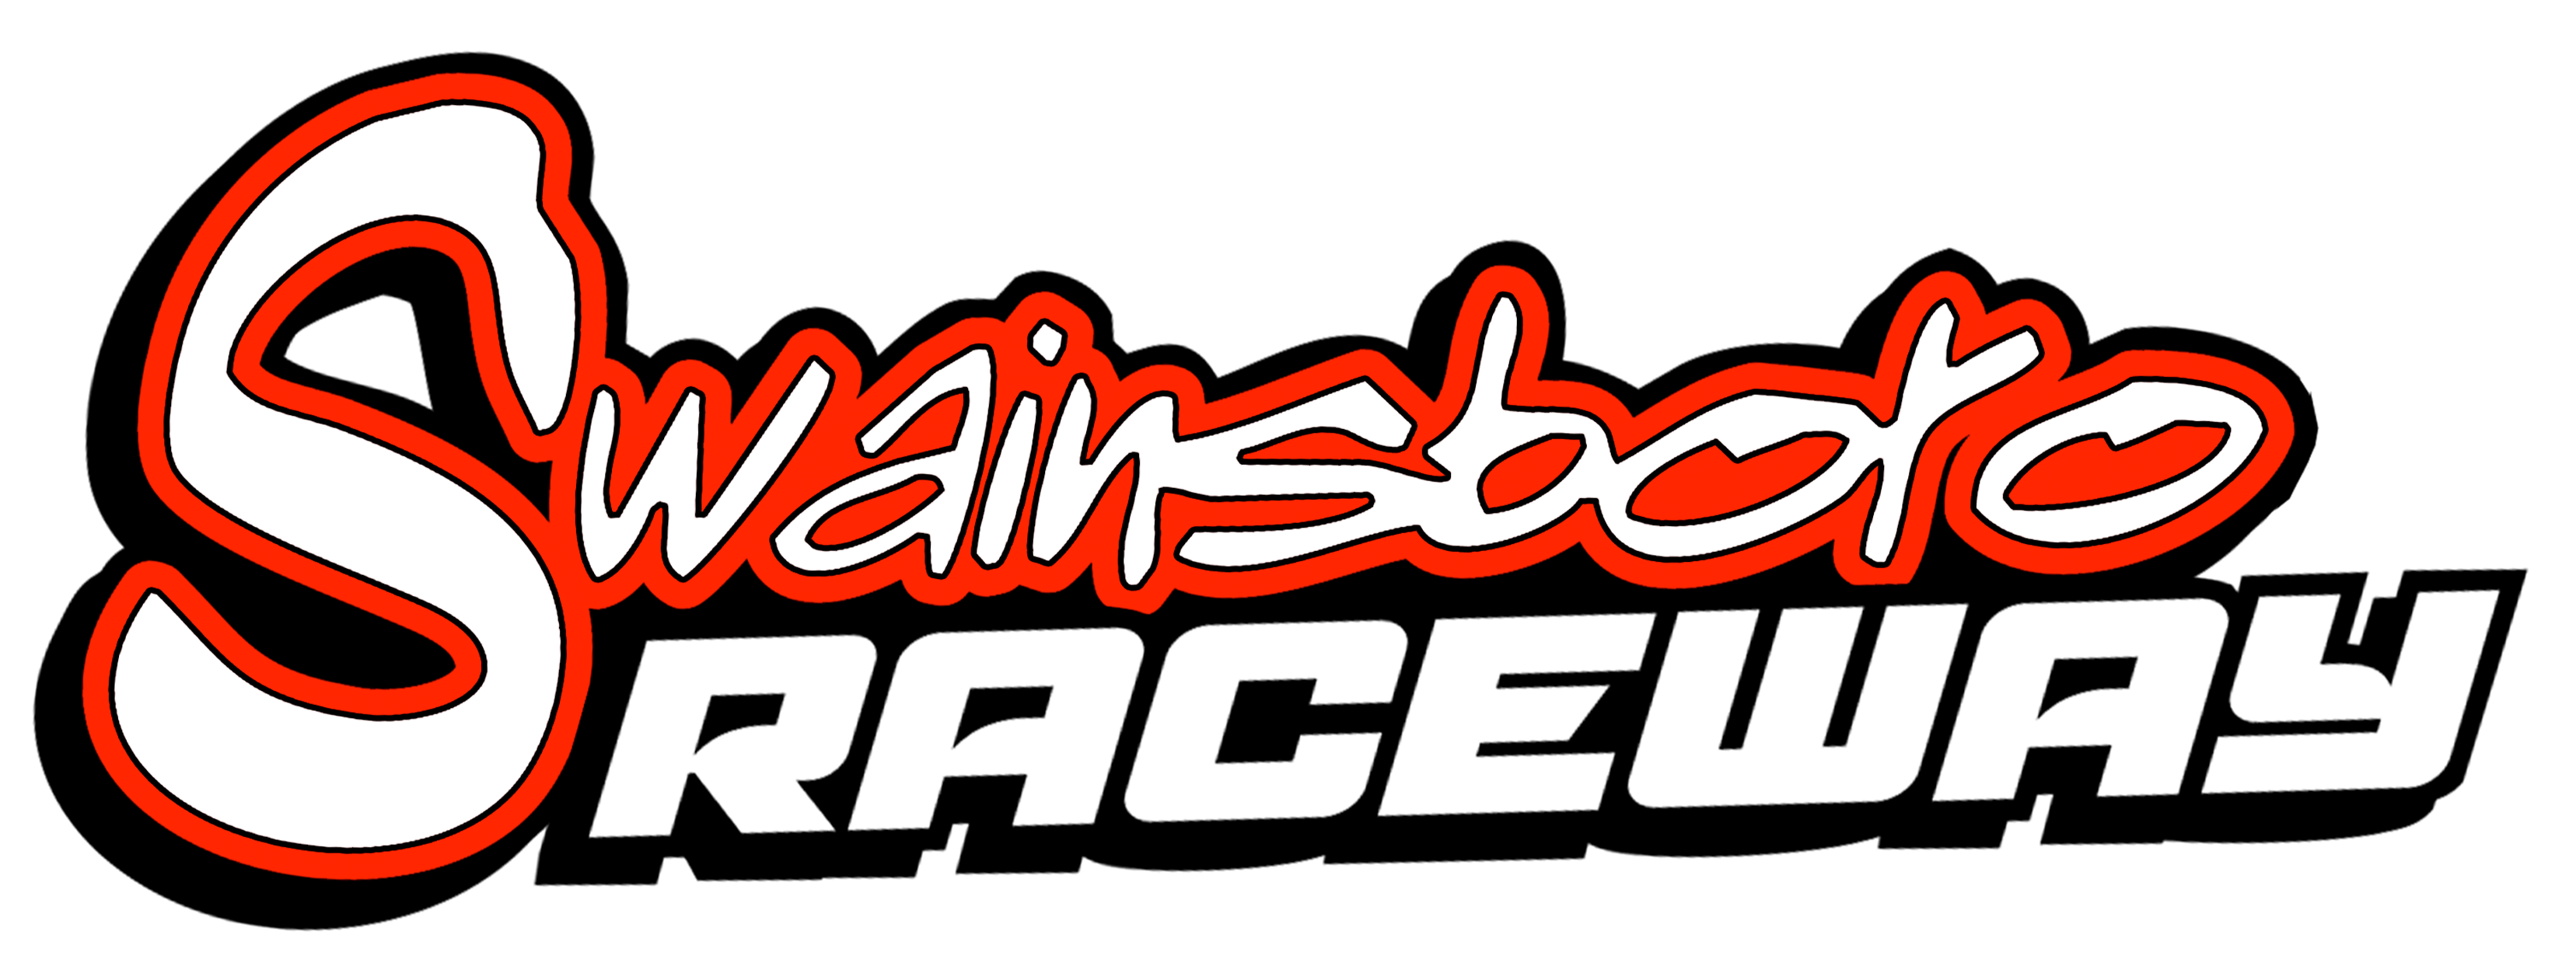 Swainsboro Raceway Logo